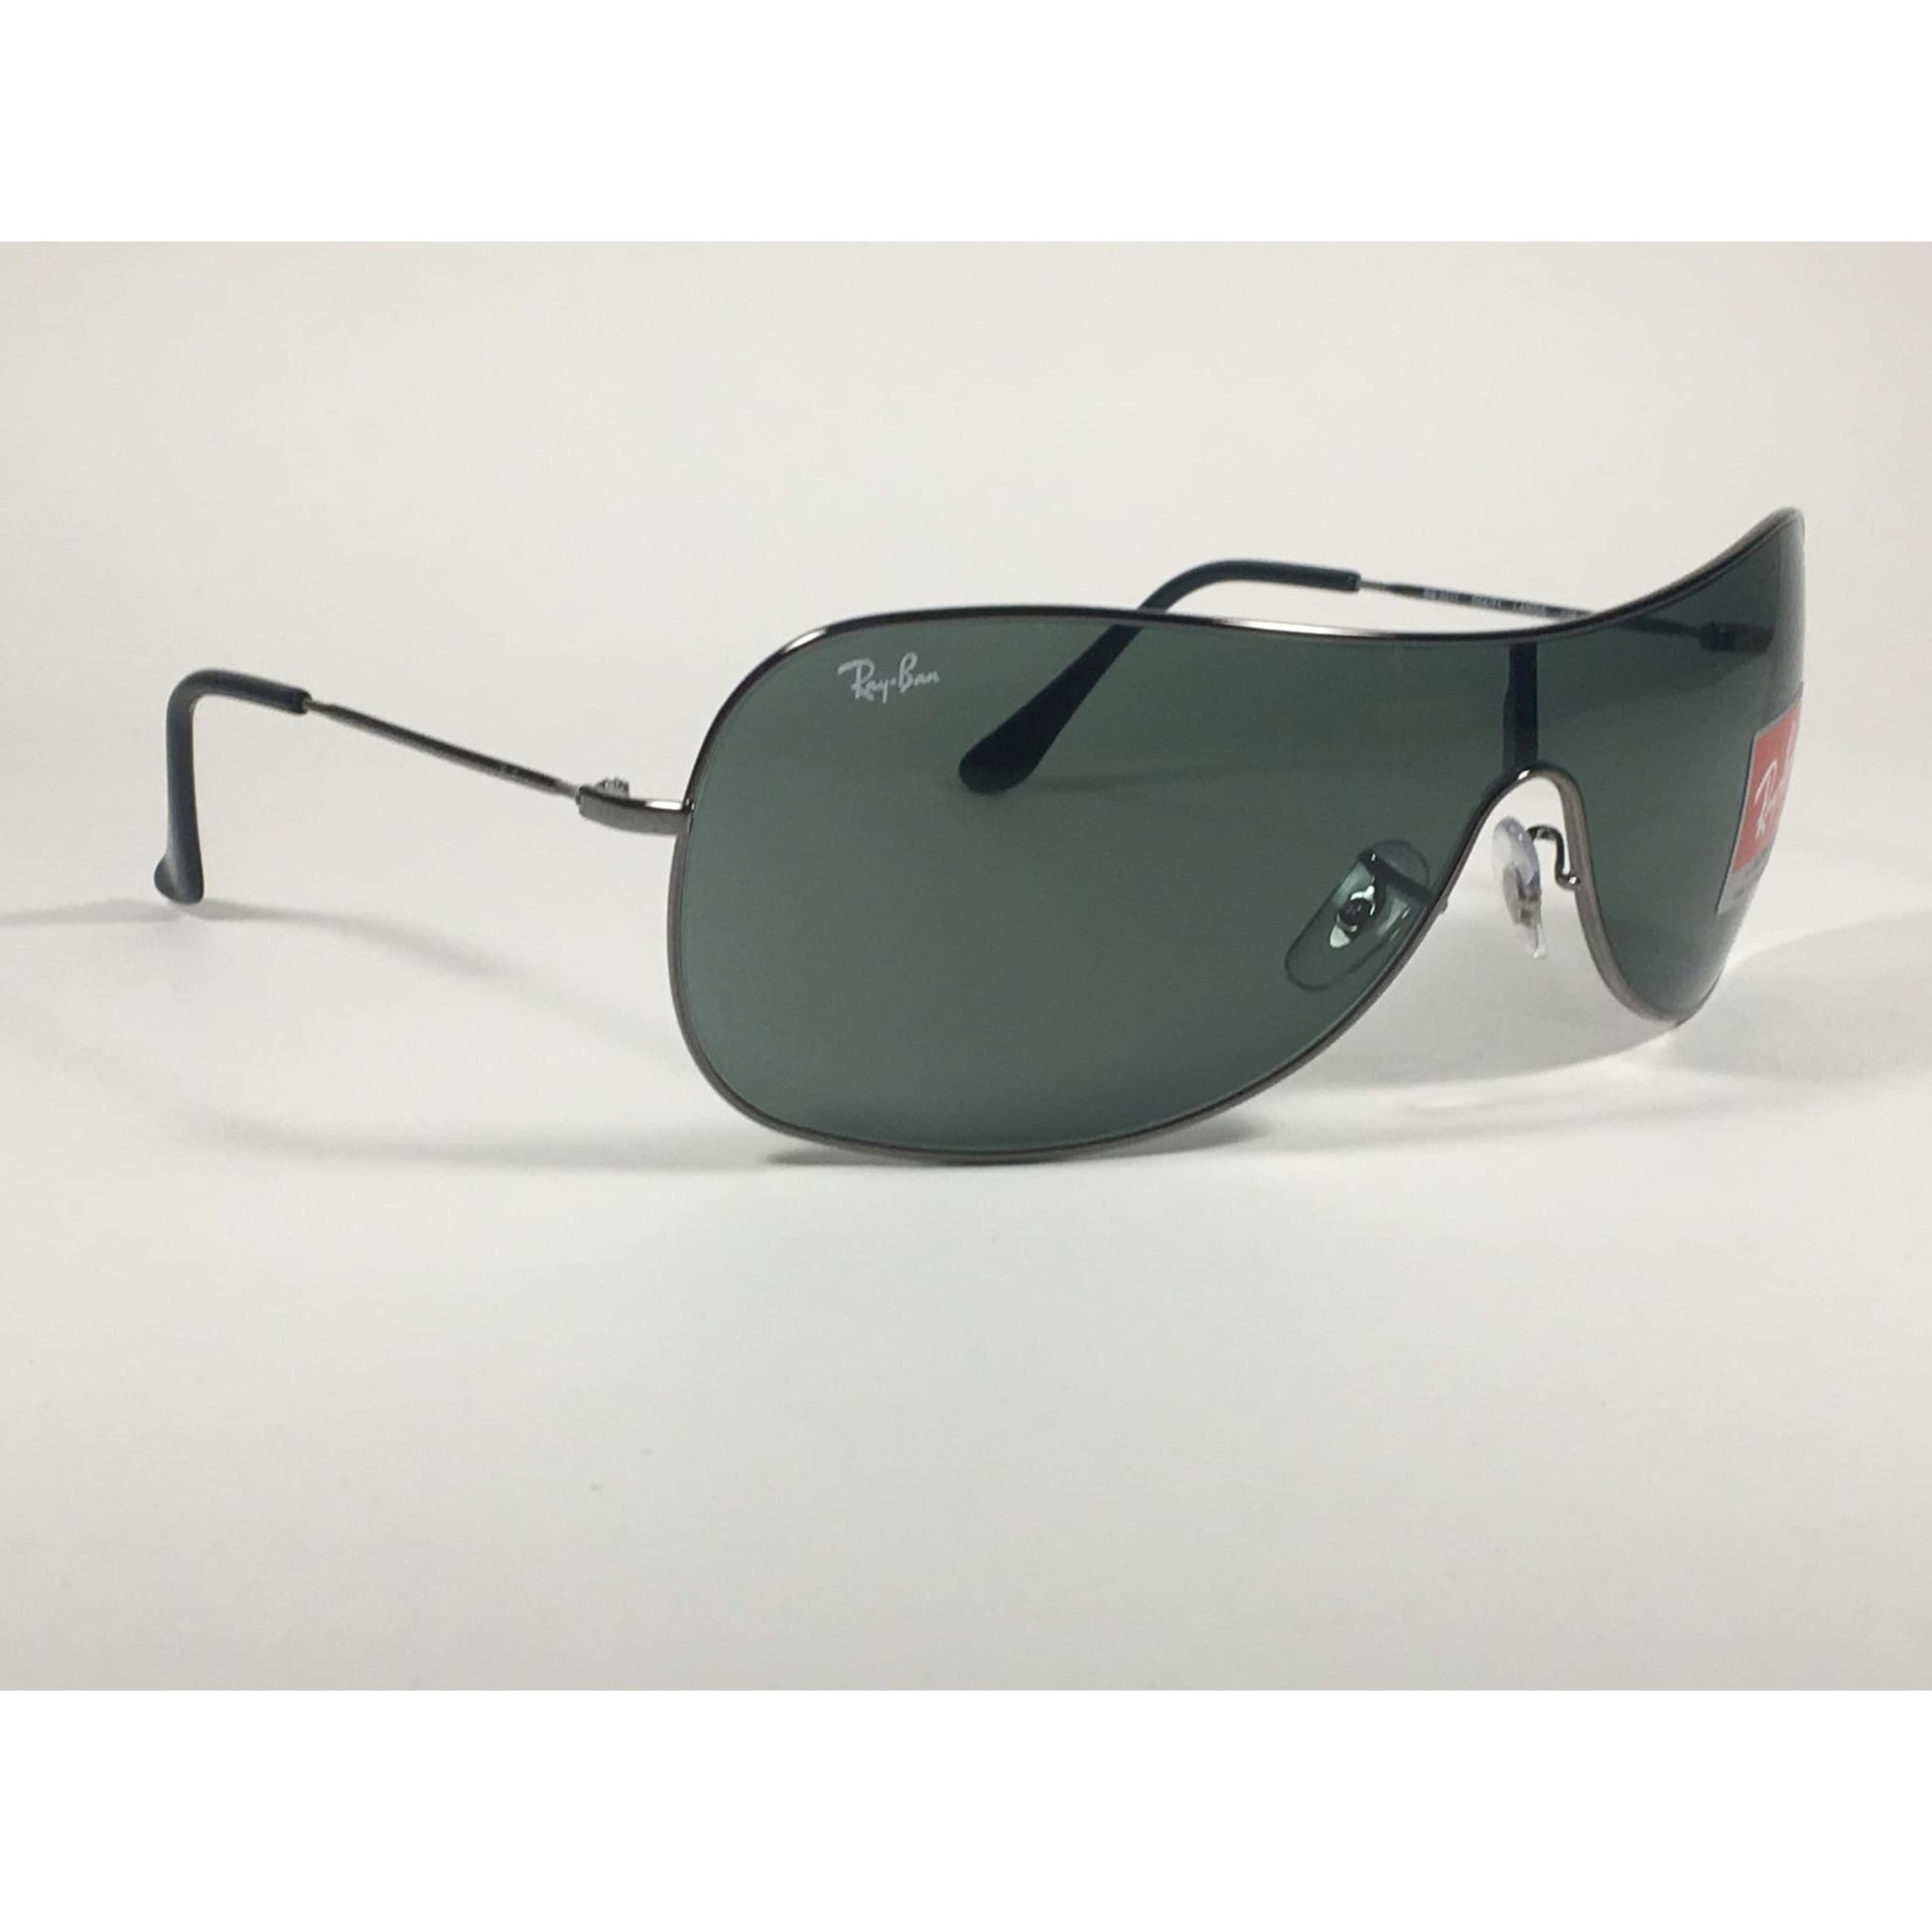 Ray-Ban Highstreet Shield Sunglasses Gunmetal Frame Green Lens RB3211 004/71 - Sunglasses